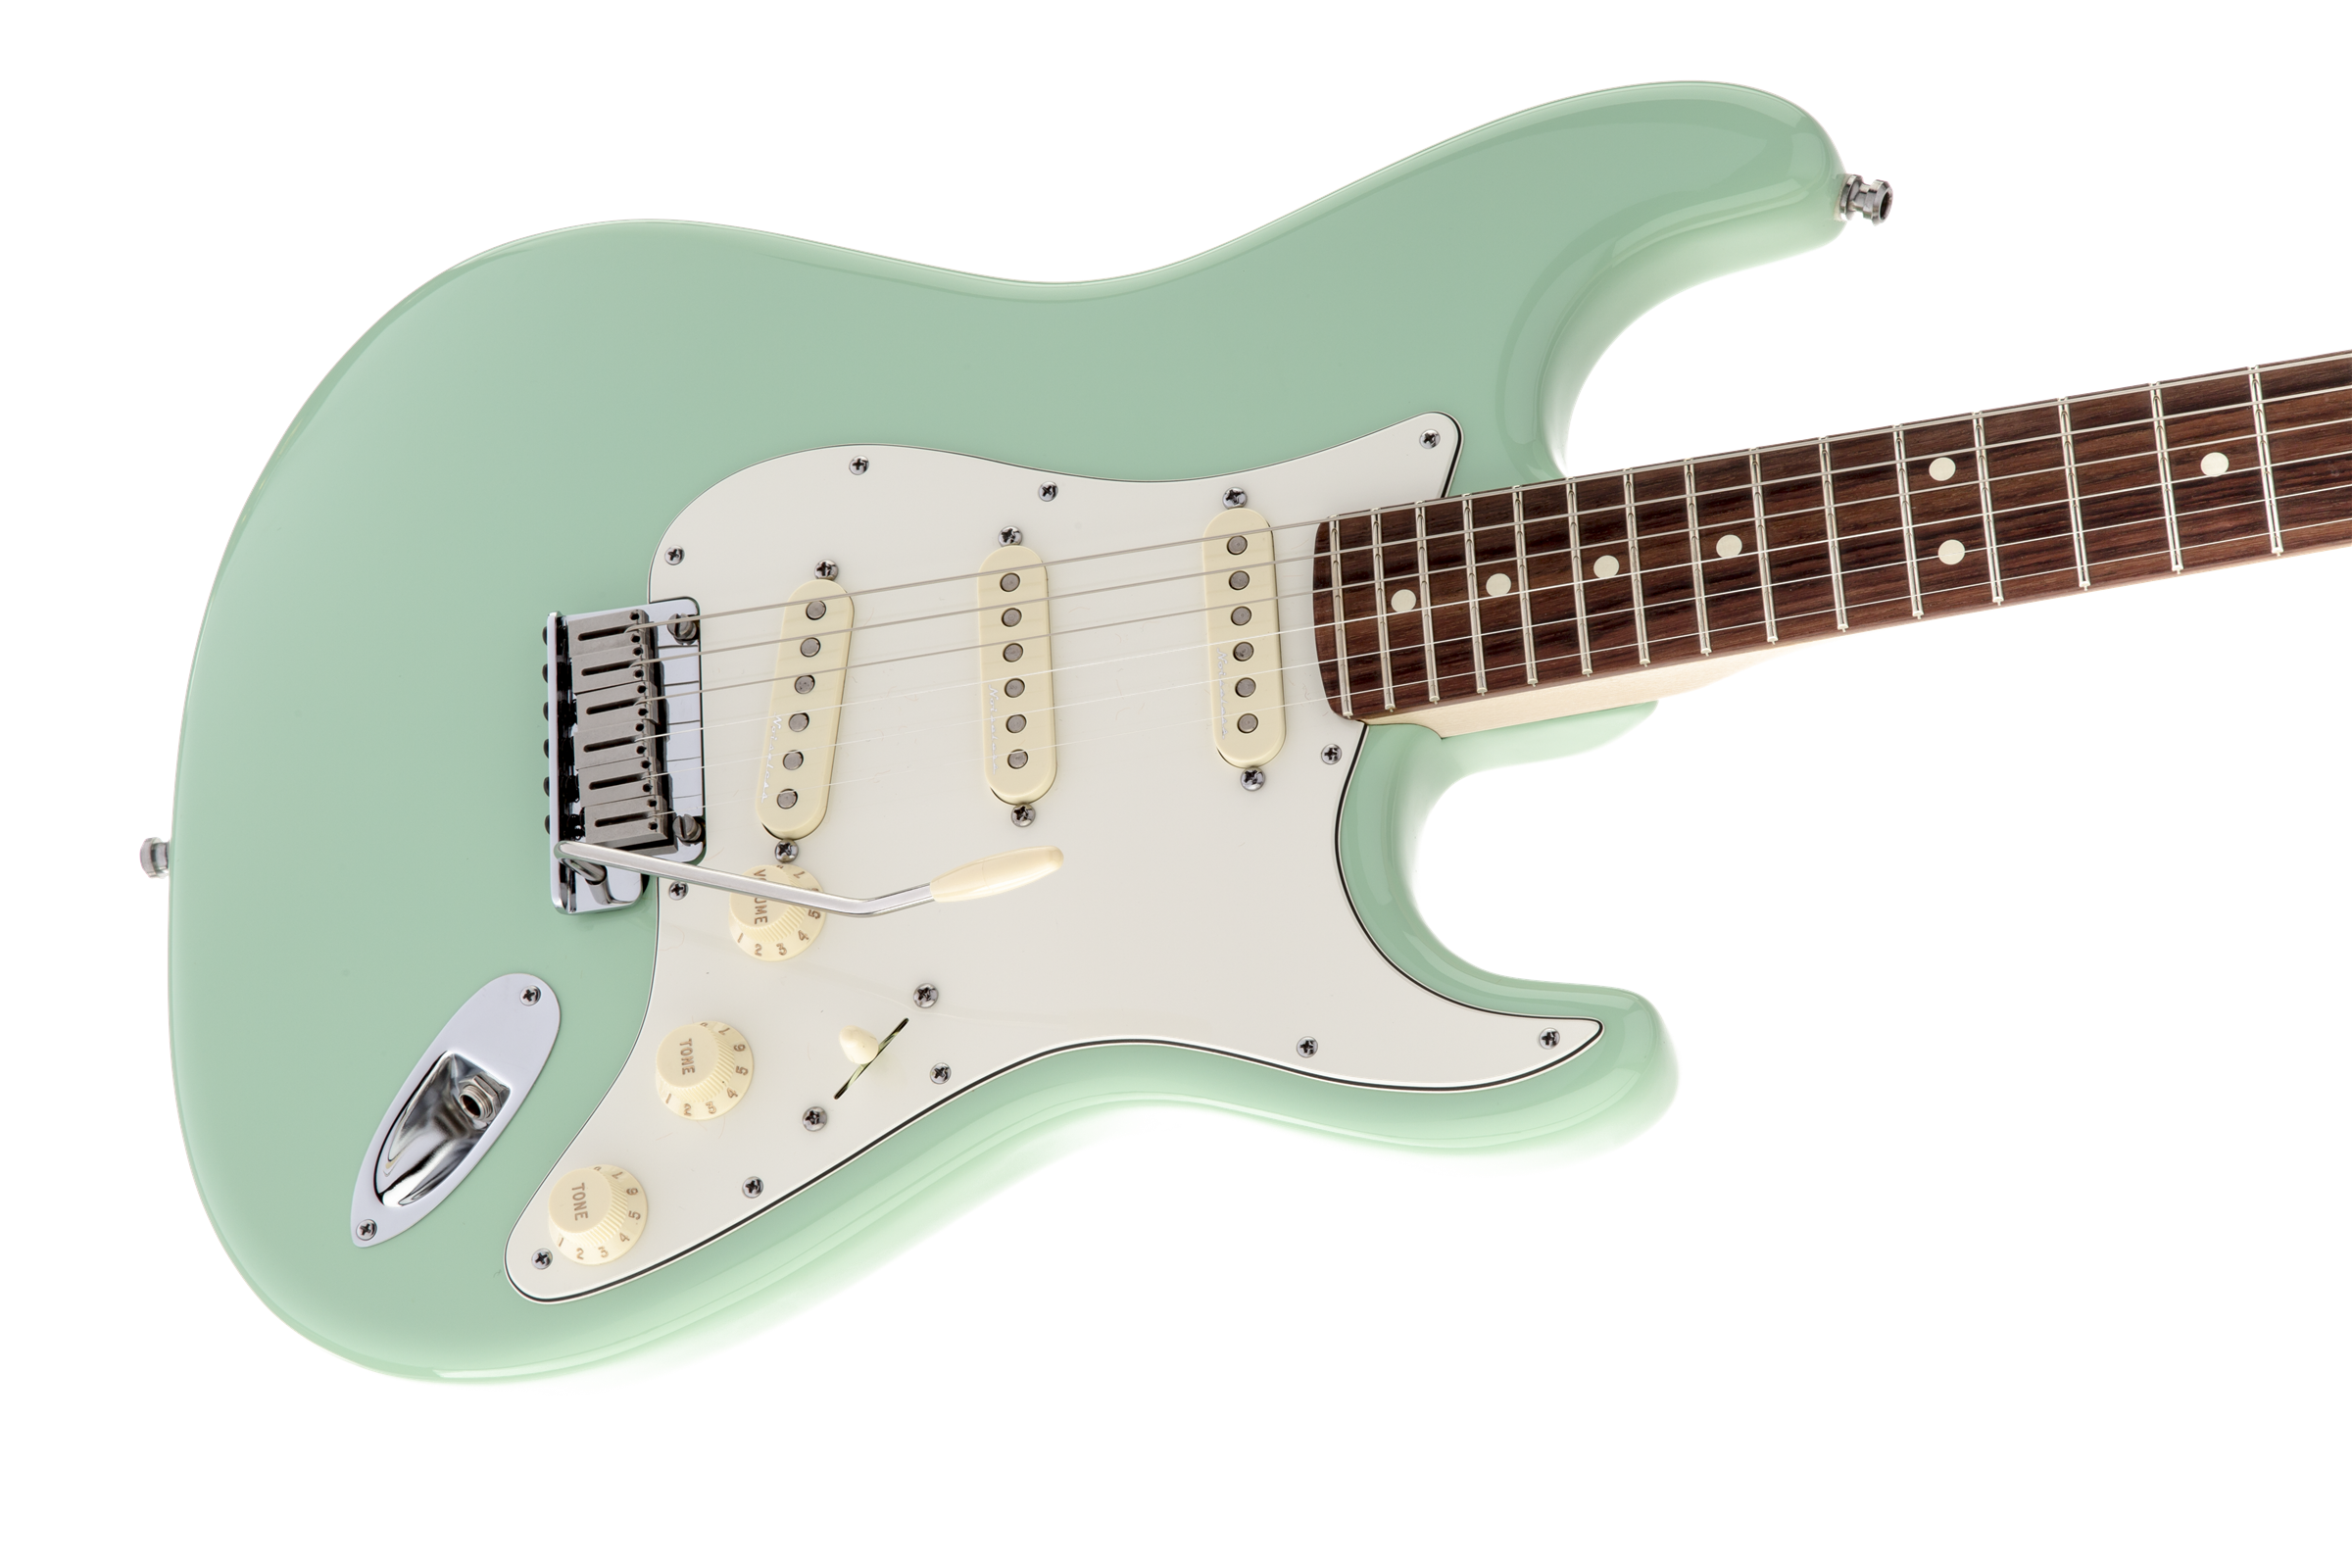 Jeff Beck Stratocaster Surf Green, Rosewood Fingerboard